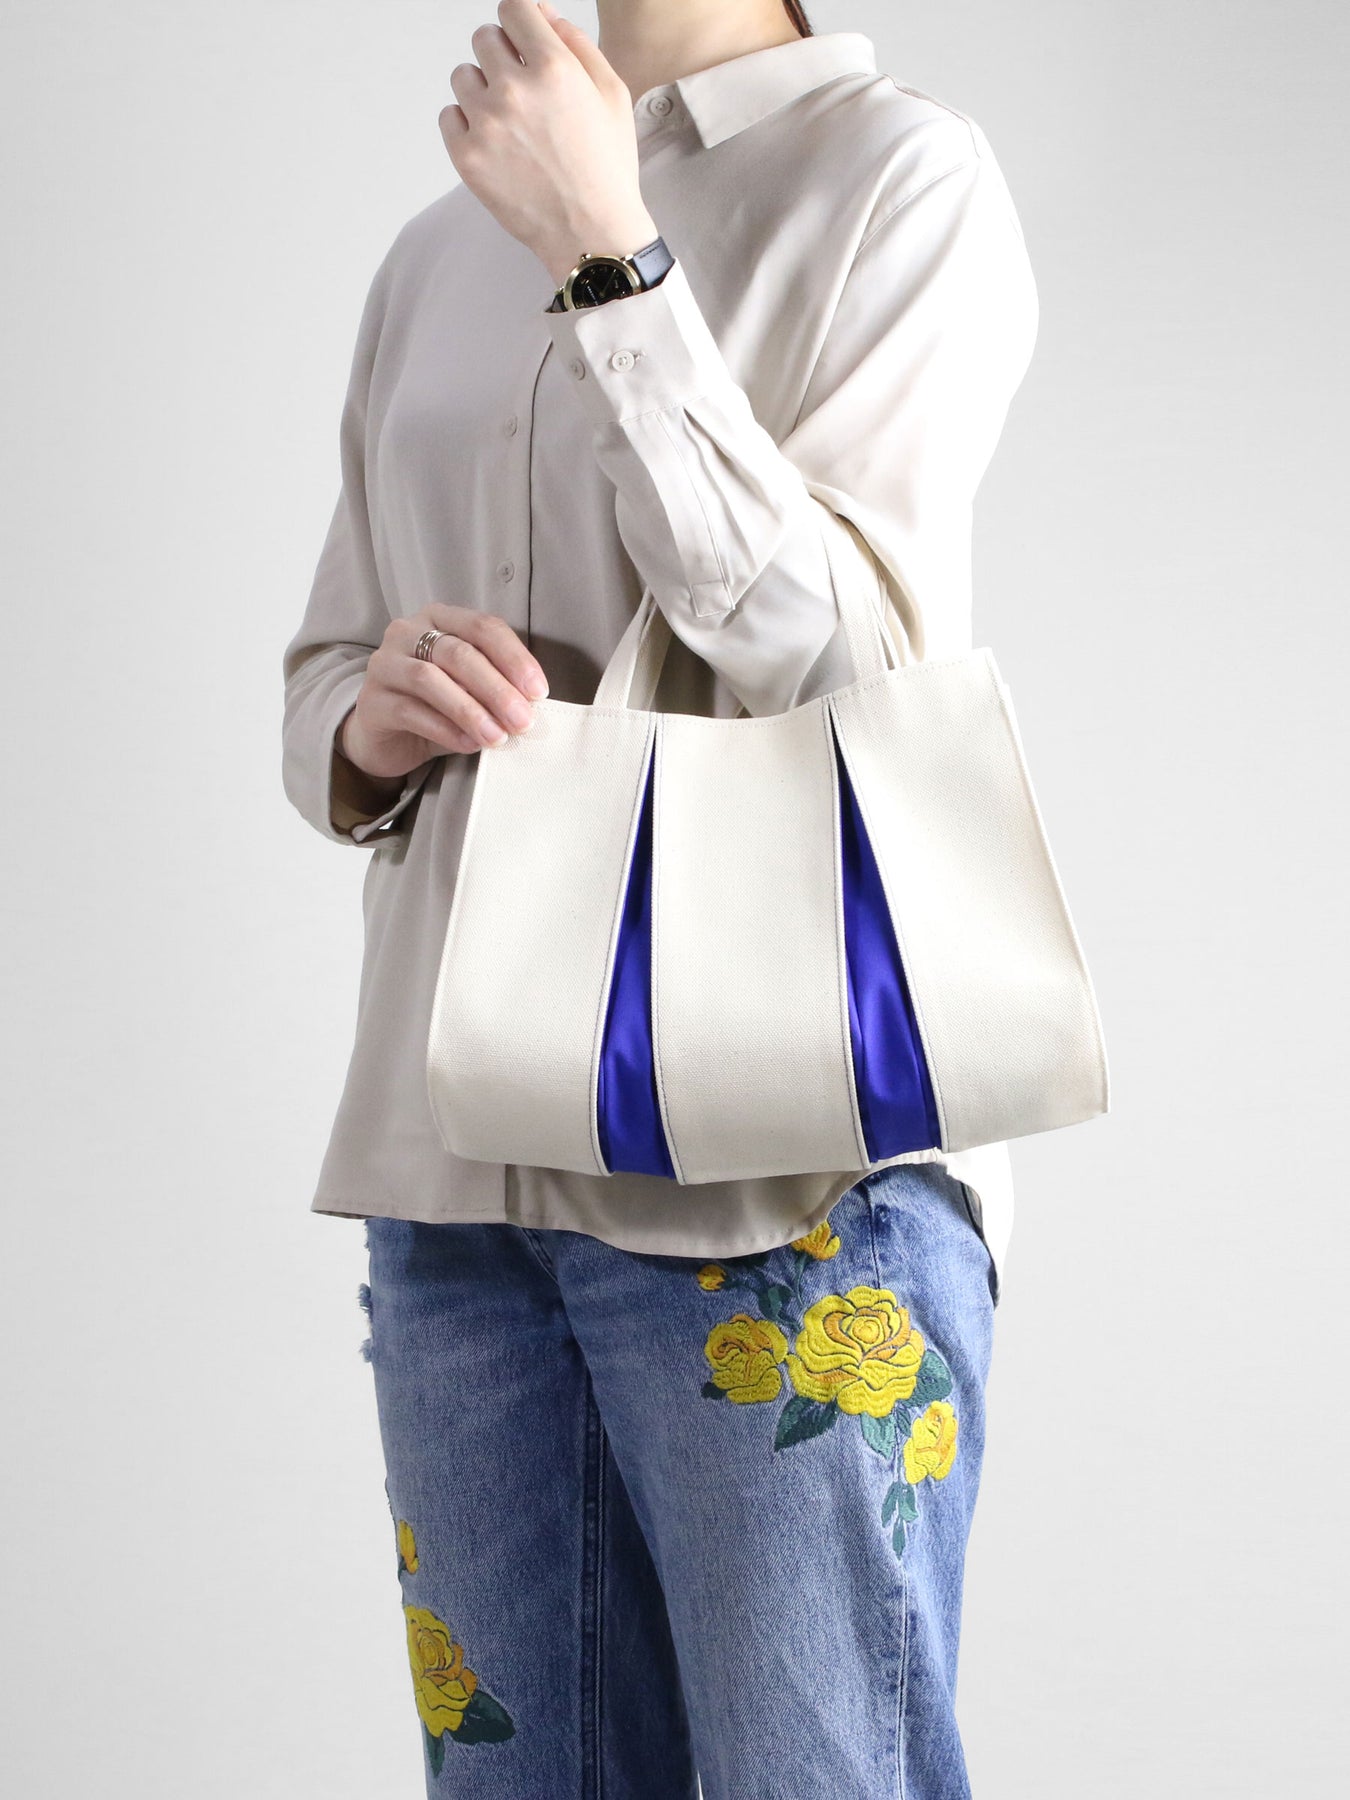 Onego White Mini Canvas Tote Bag